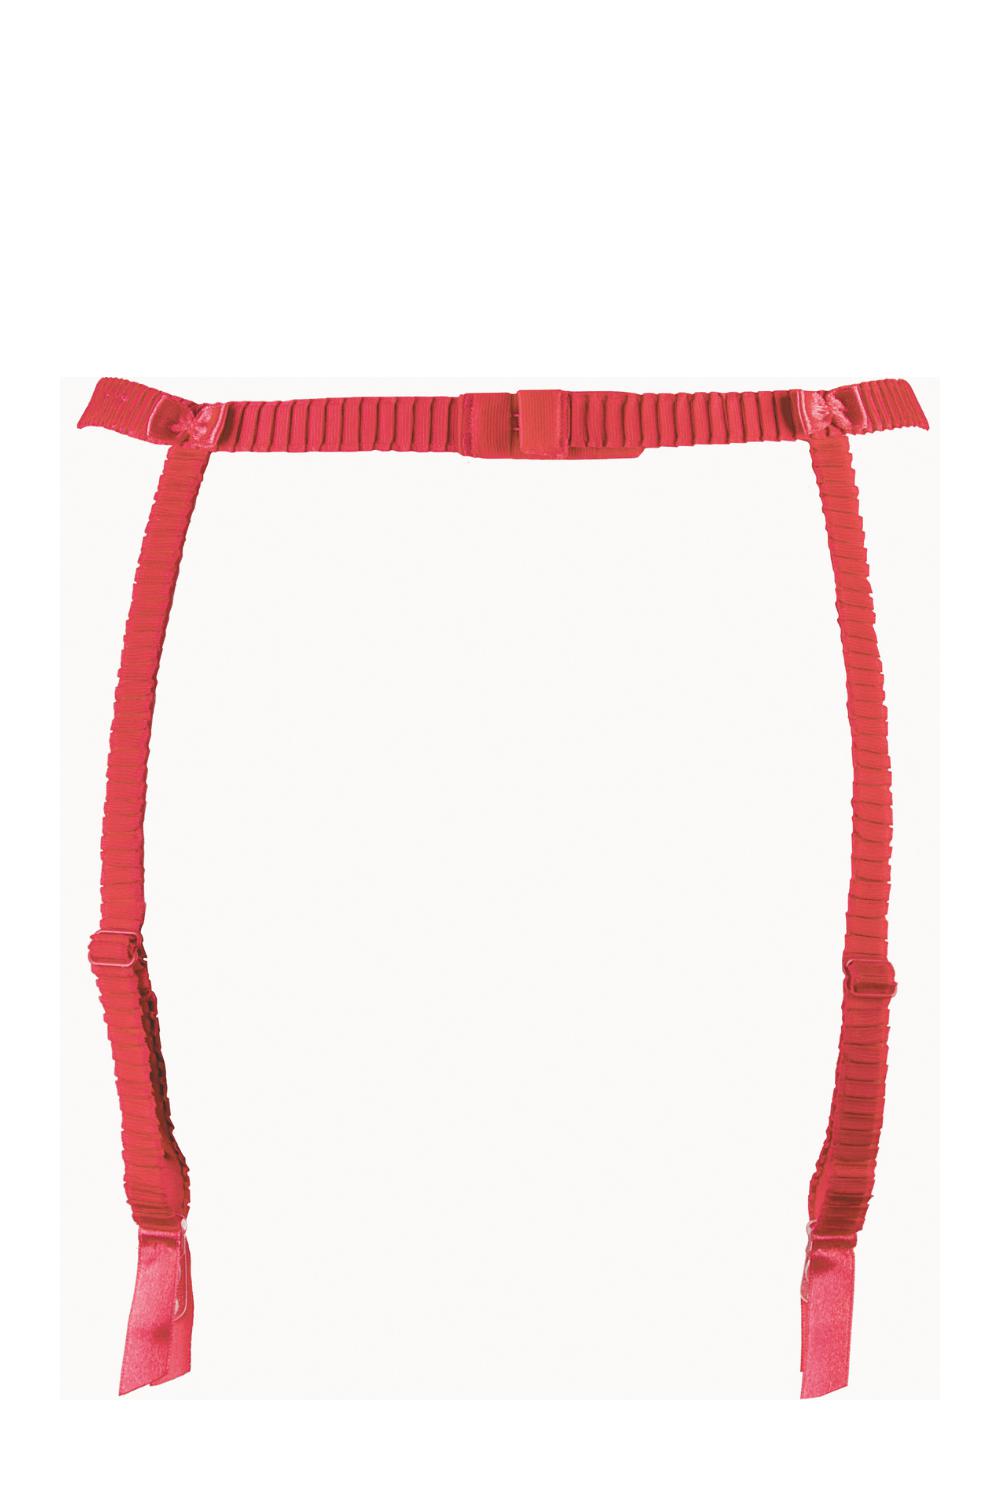 Watermelon Embroidery Garter Belt-Axami-Rebel Romance